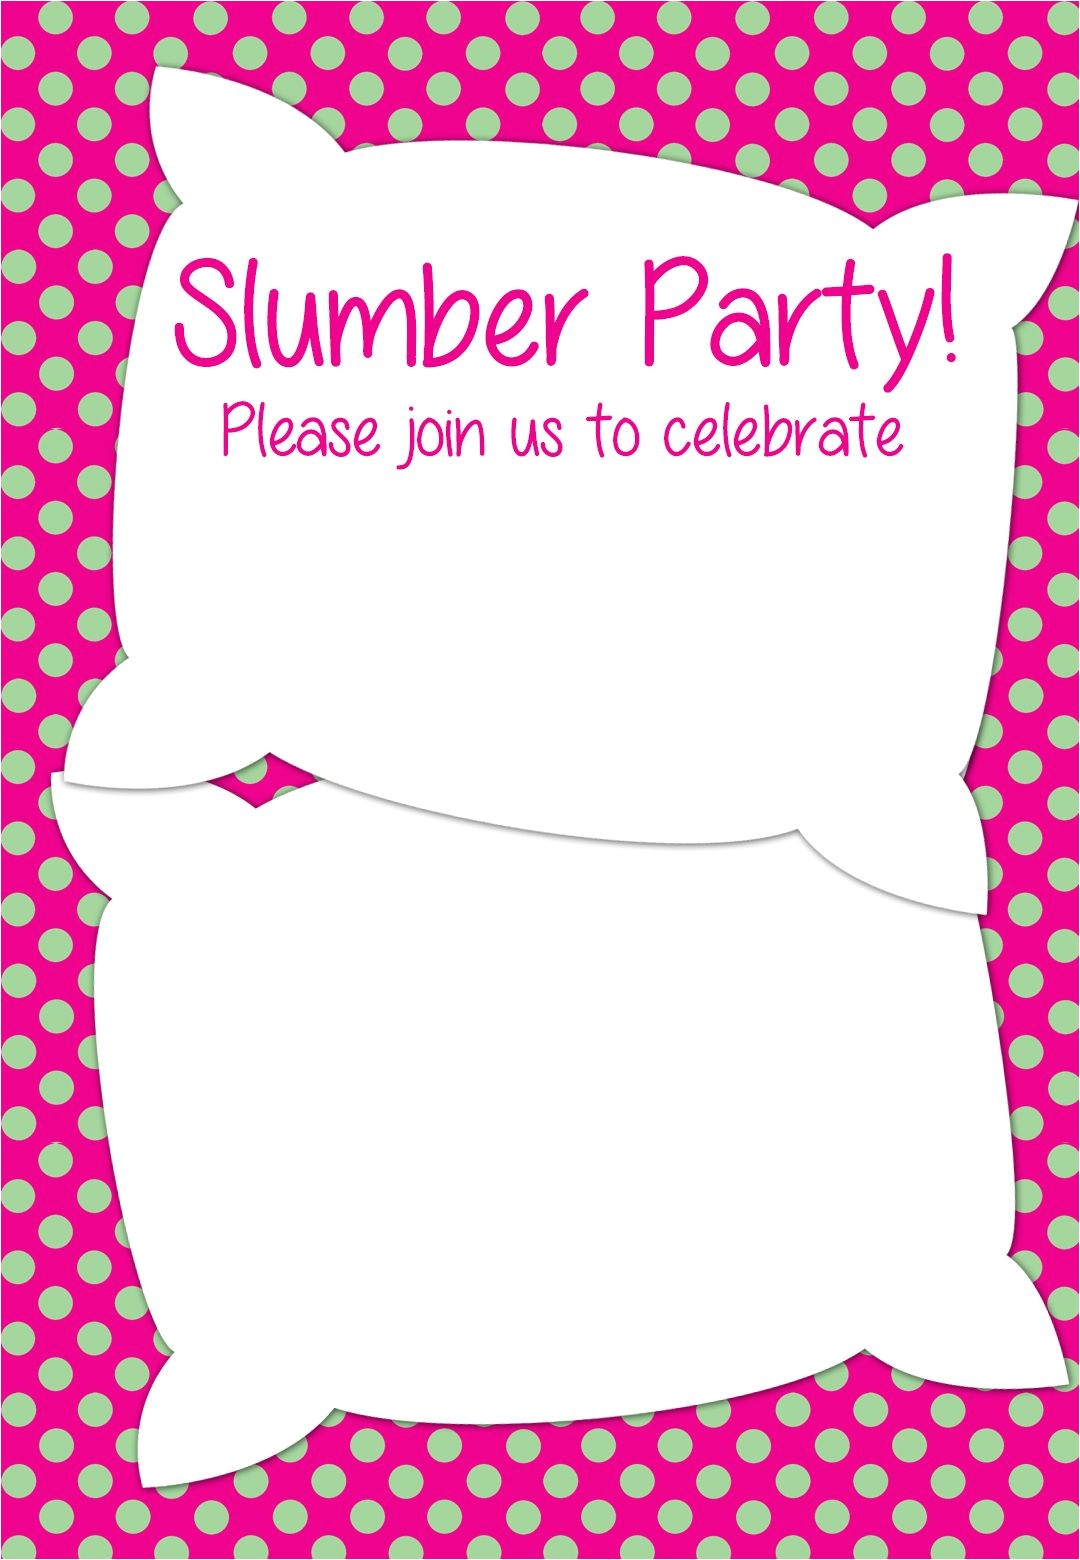 Free Slumber Party Invitations to Print Free Printable Slumber Party Invitation